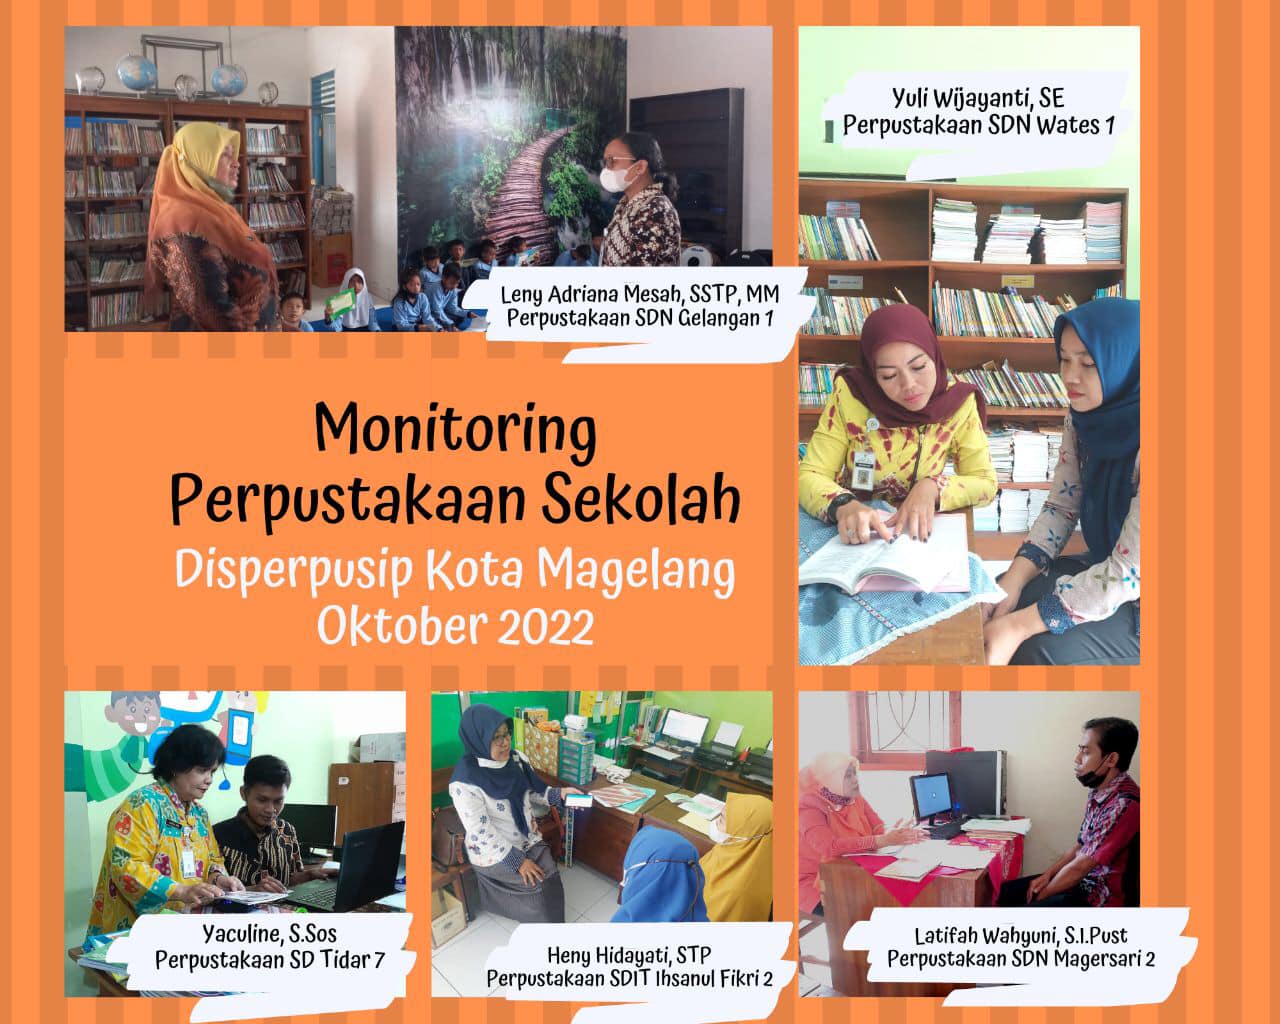 Monitoring Perpustakaan Sekolah Disperpusip Kota Magelang Oktober 2022